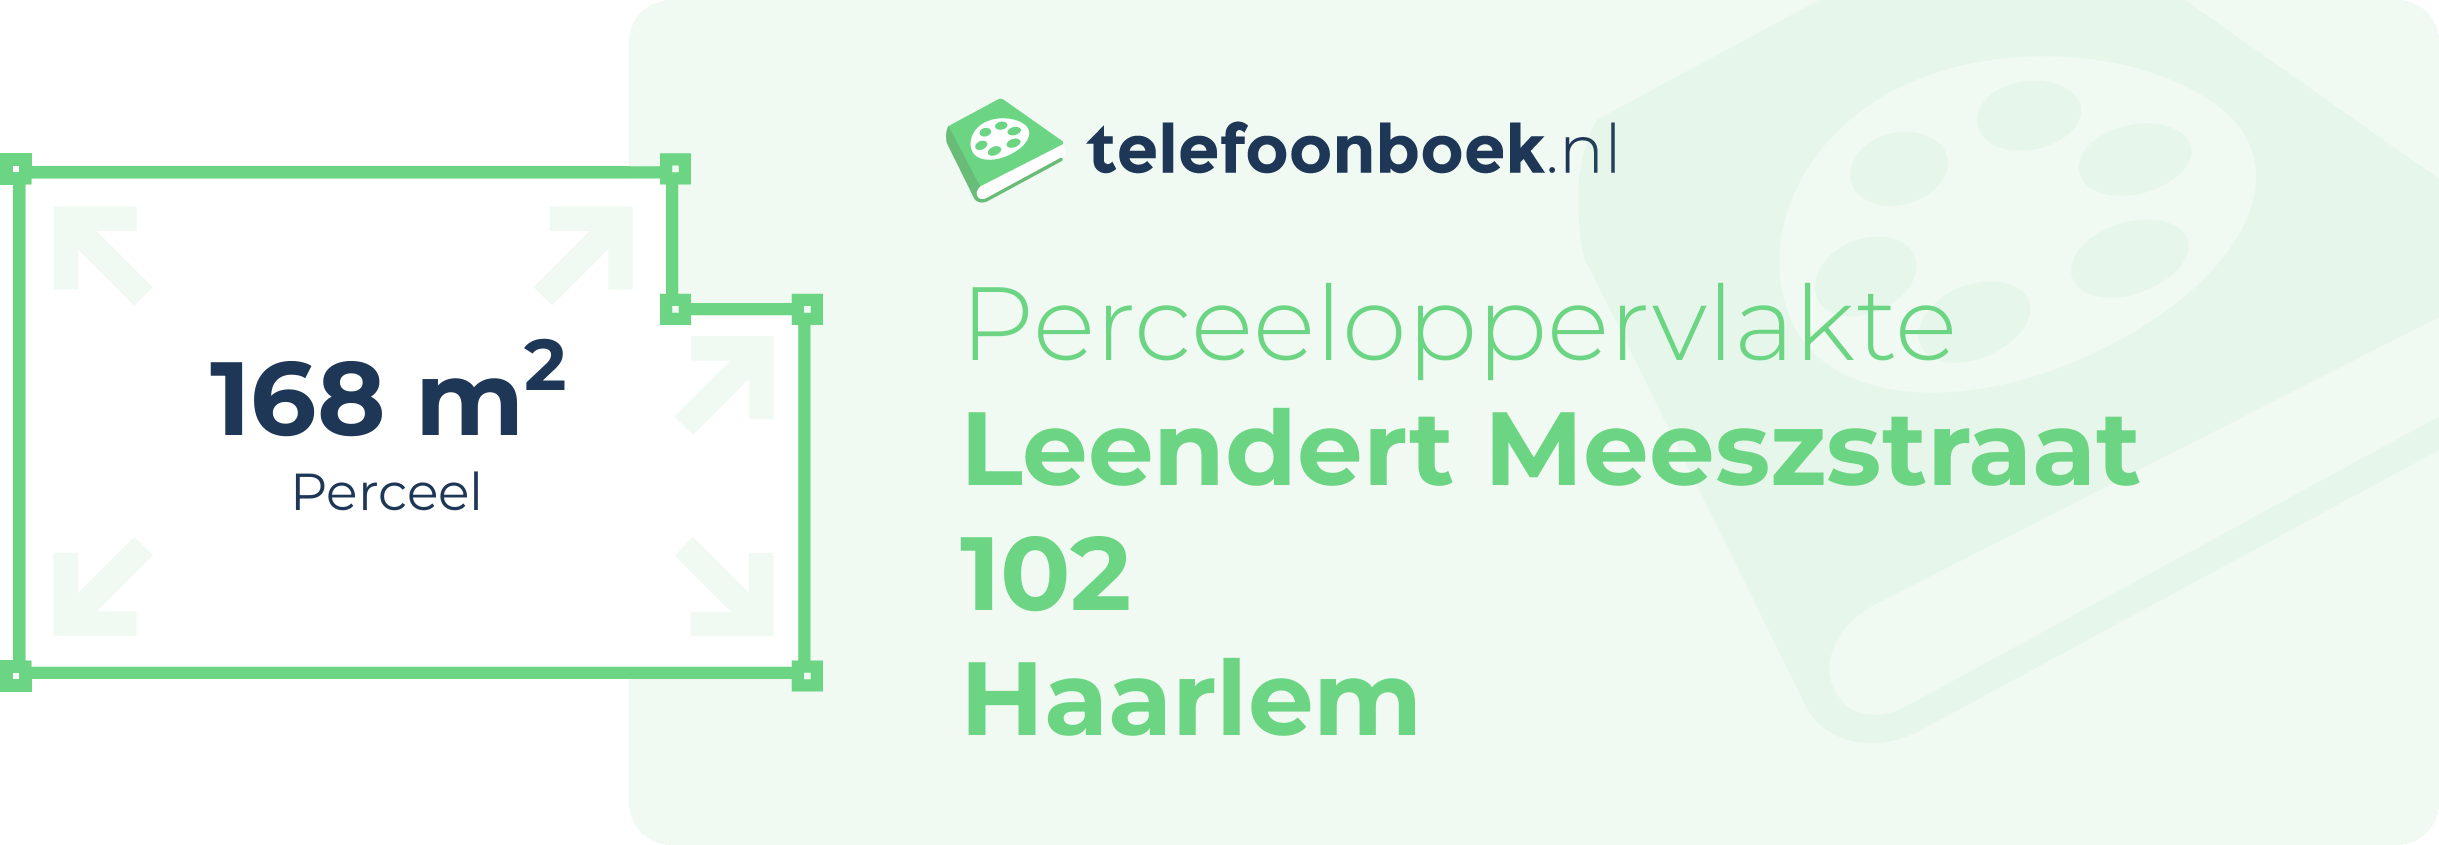 Perceeloppervlakte Leendert Meeszstraat 102 Haarlem